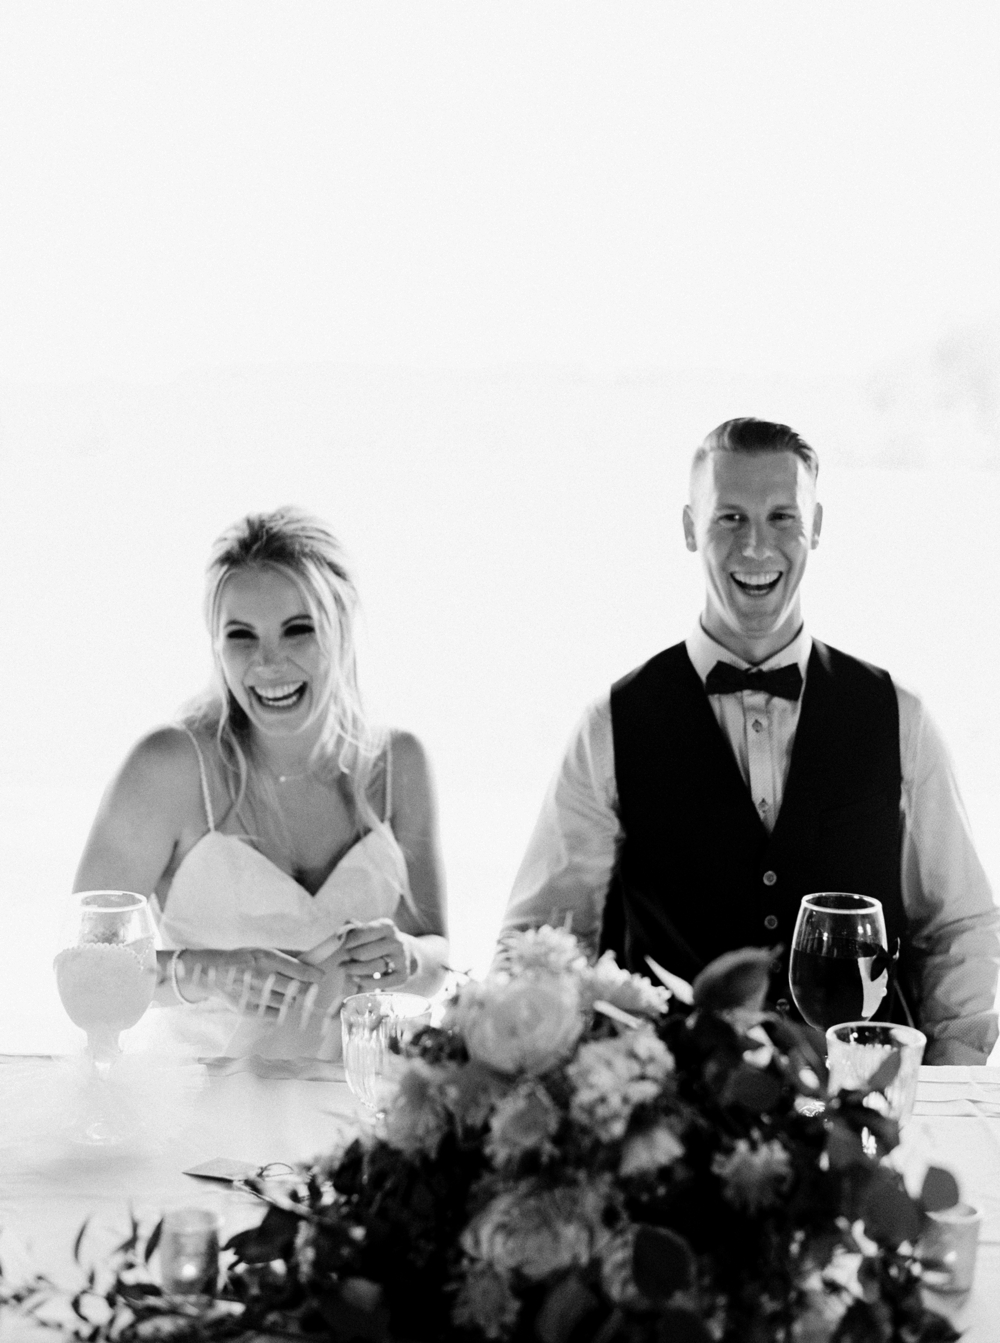 Calgary Wedding Photographers | Willow Lane Barn Olds Wedding | Alberta Wedding Photography | Outdoor Wedding Ceremony | Rustic Wedding | Fine Art Film Photographer | Neutral Color Palette